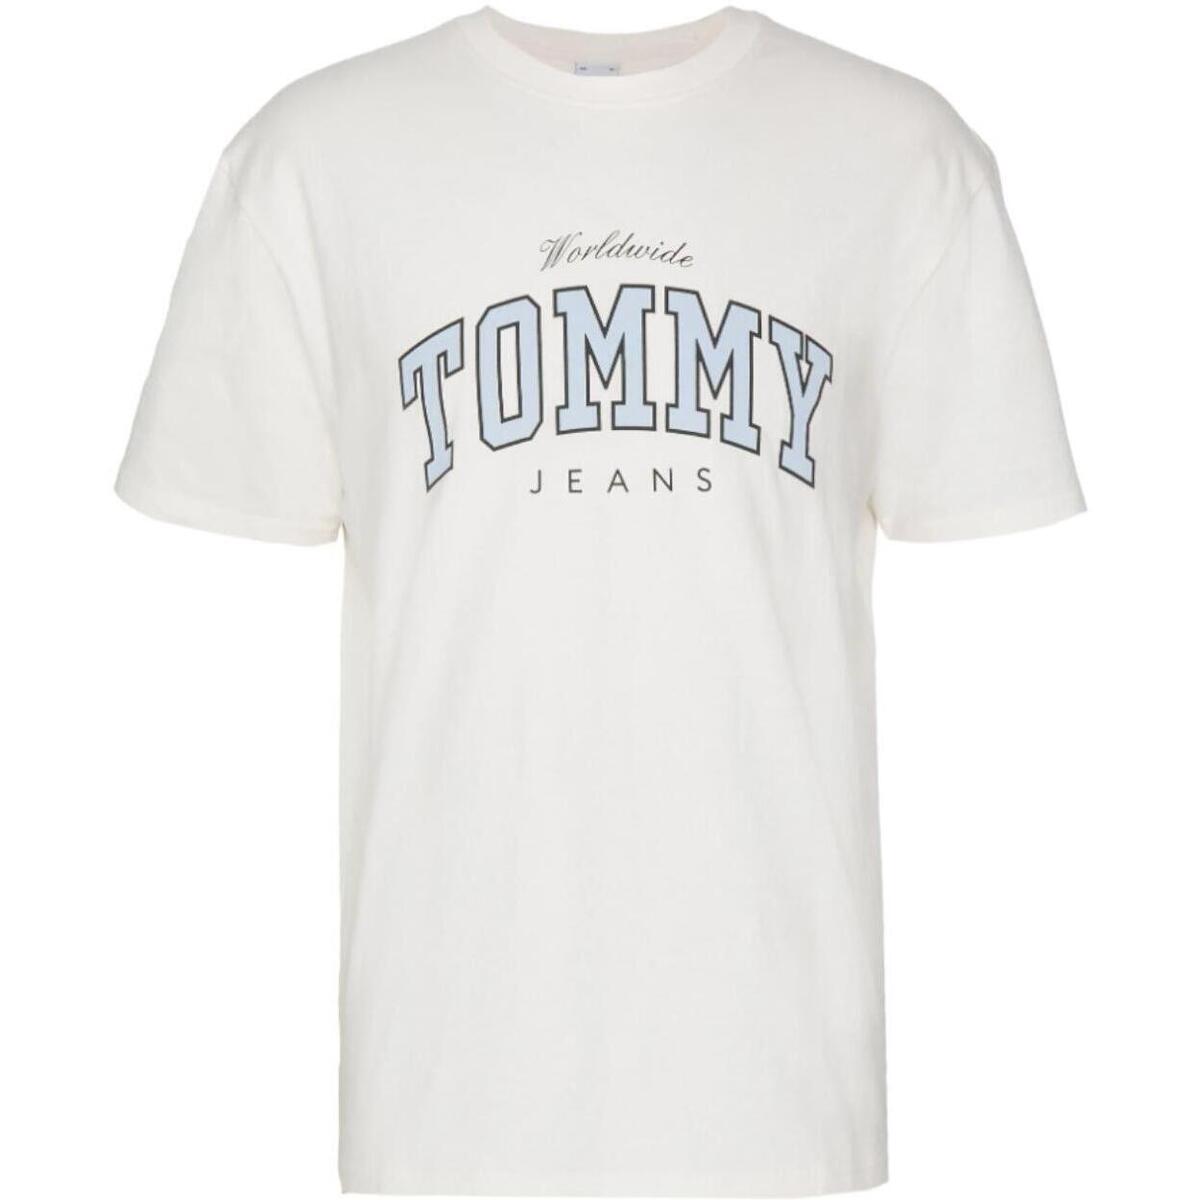 Oblečenie Muž Tričká s krátkym rukávom Tommy Hilfiger  Biela